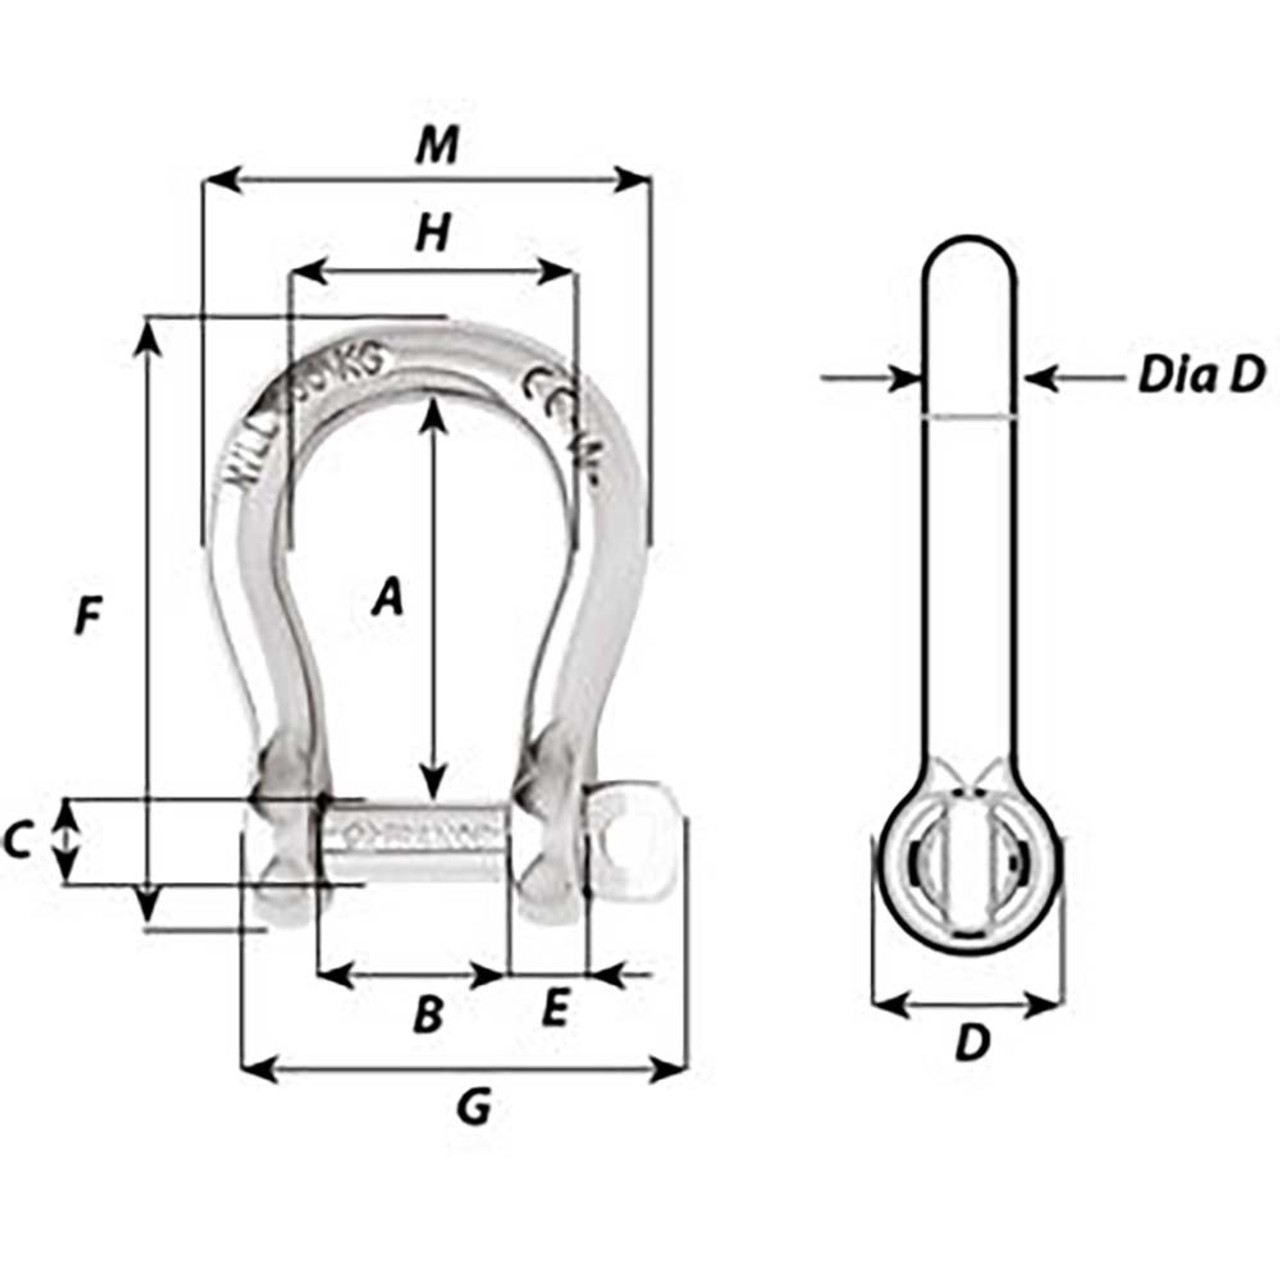 Wichard Self-Locking Bow Shackle - Diameter 8mm - 5\/16" [01244]